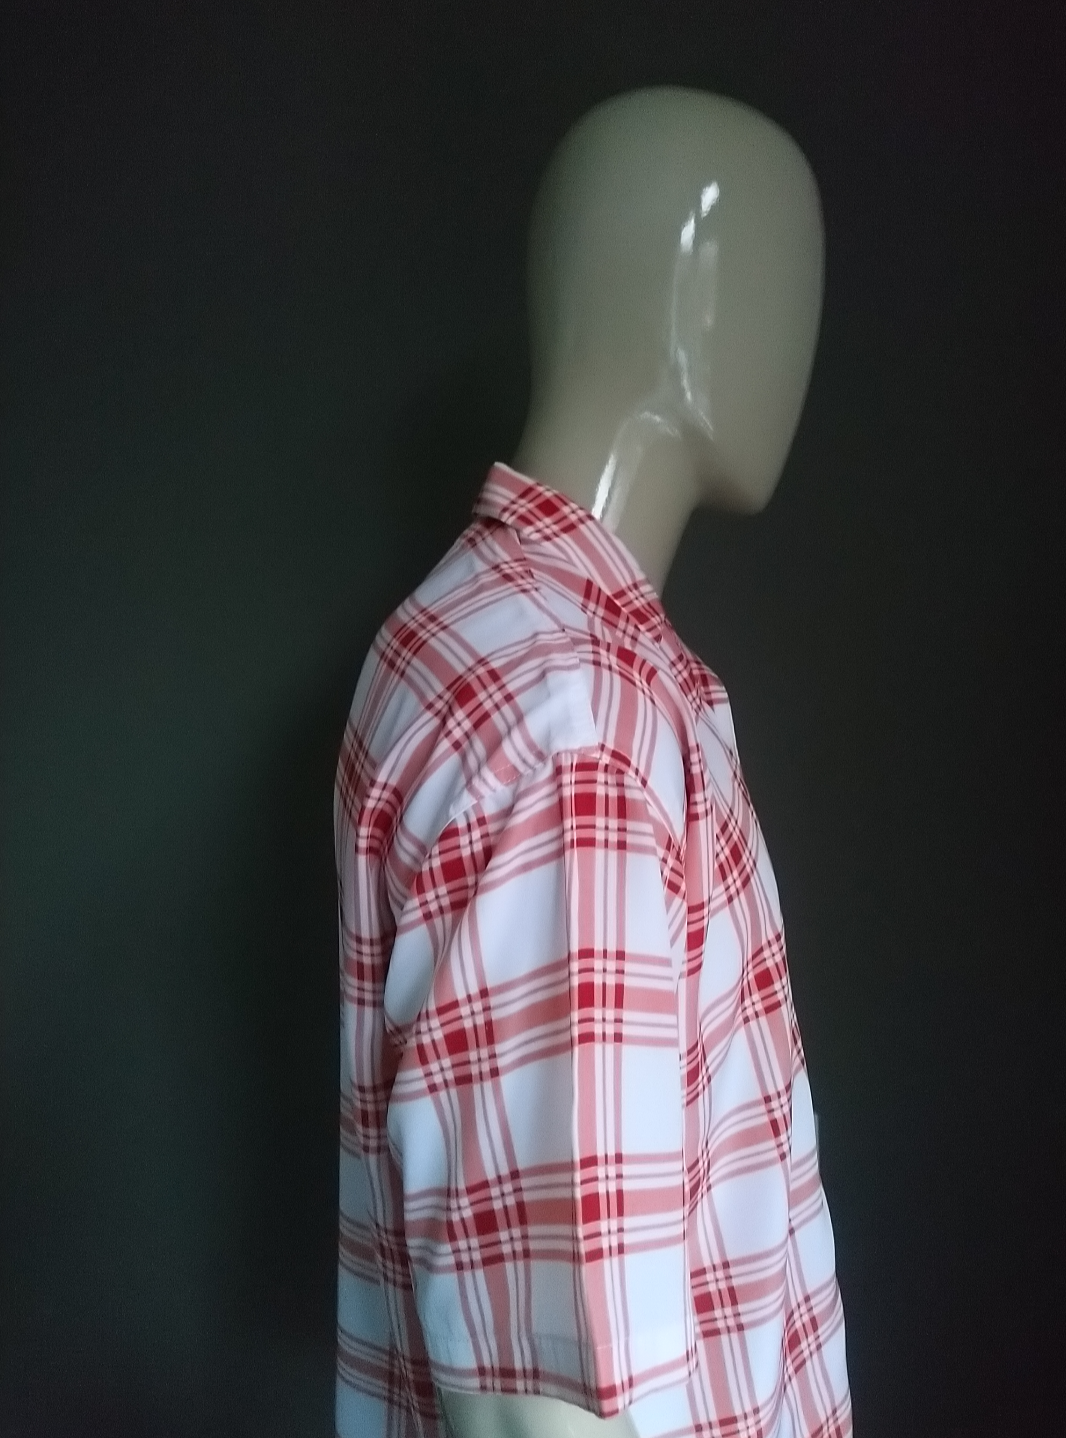 Camisa SuperCool con mangas cortas. Motivo a cuadros blanco rosa rojo. Talla L.